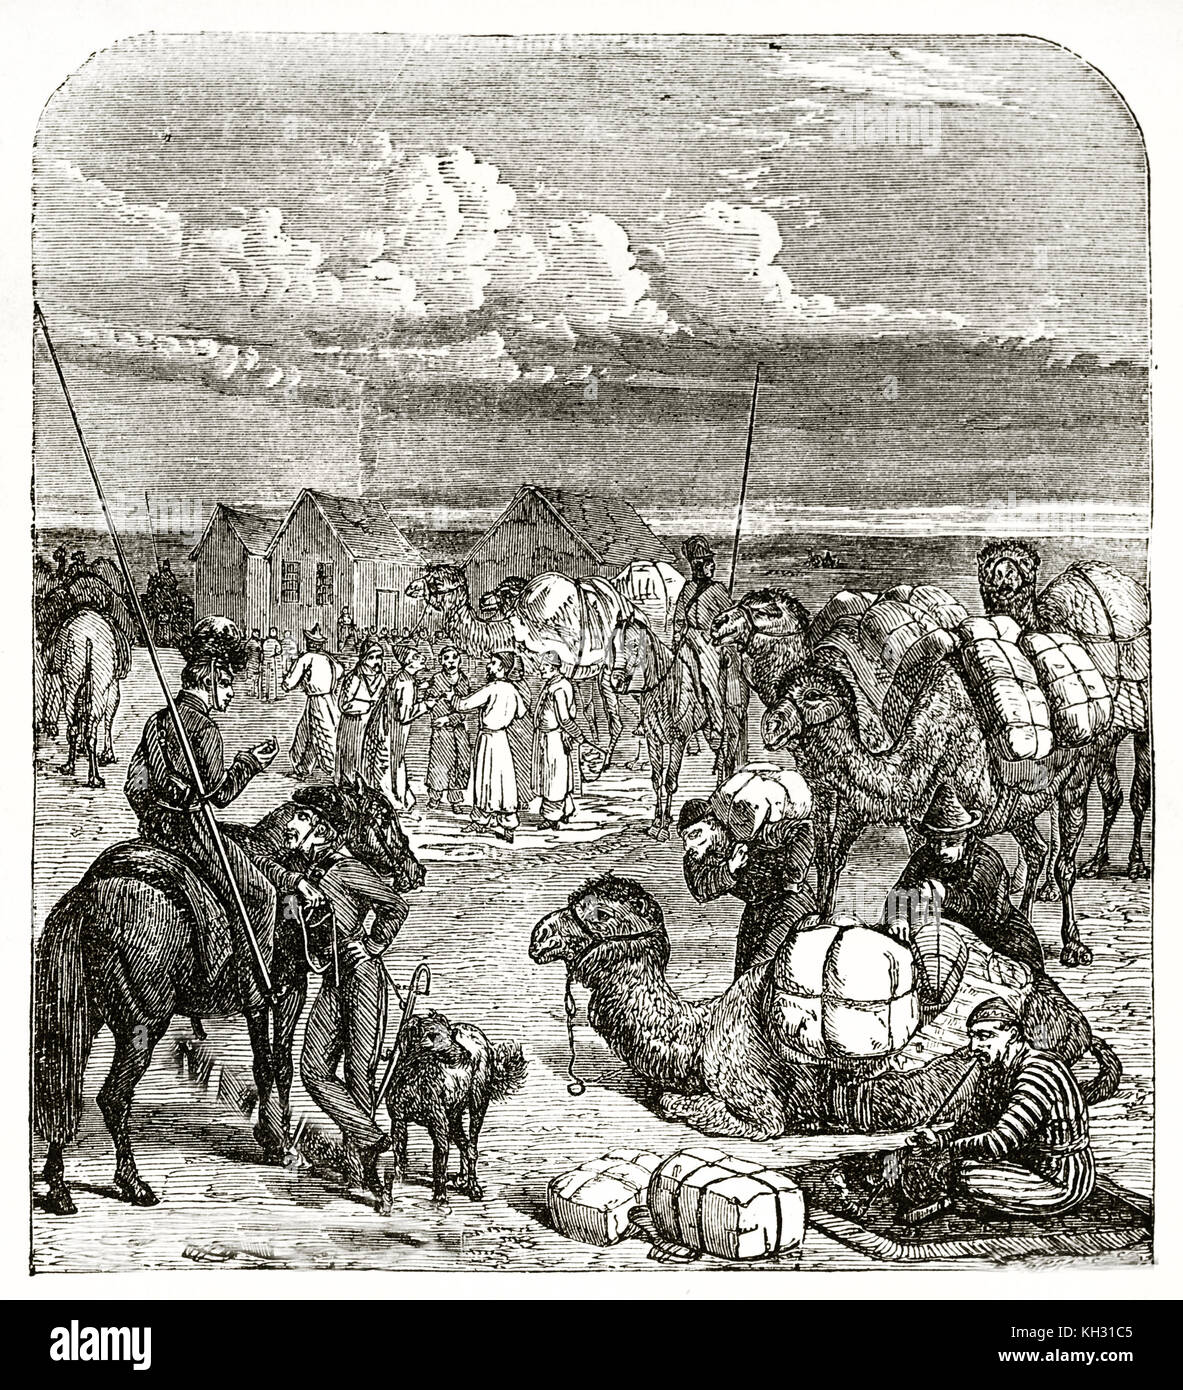 Old illustration depicting Sino-Russian caravan in Kyaktha, Siberia. By Atkinson, publ. on le Tour du Monde, Paris, 1863 Stock Photo